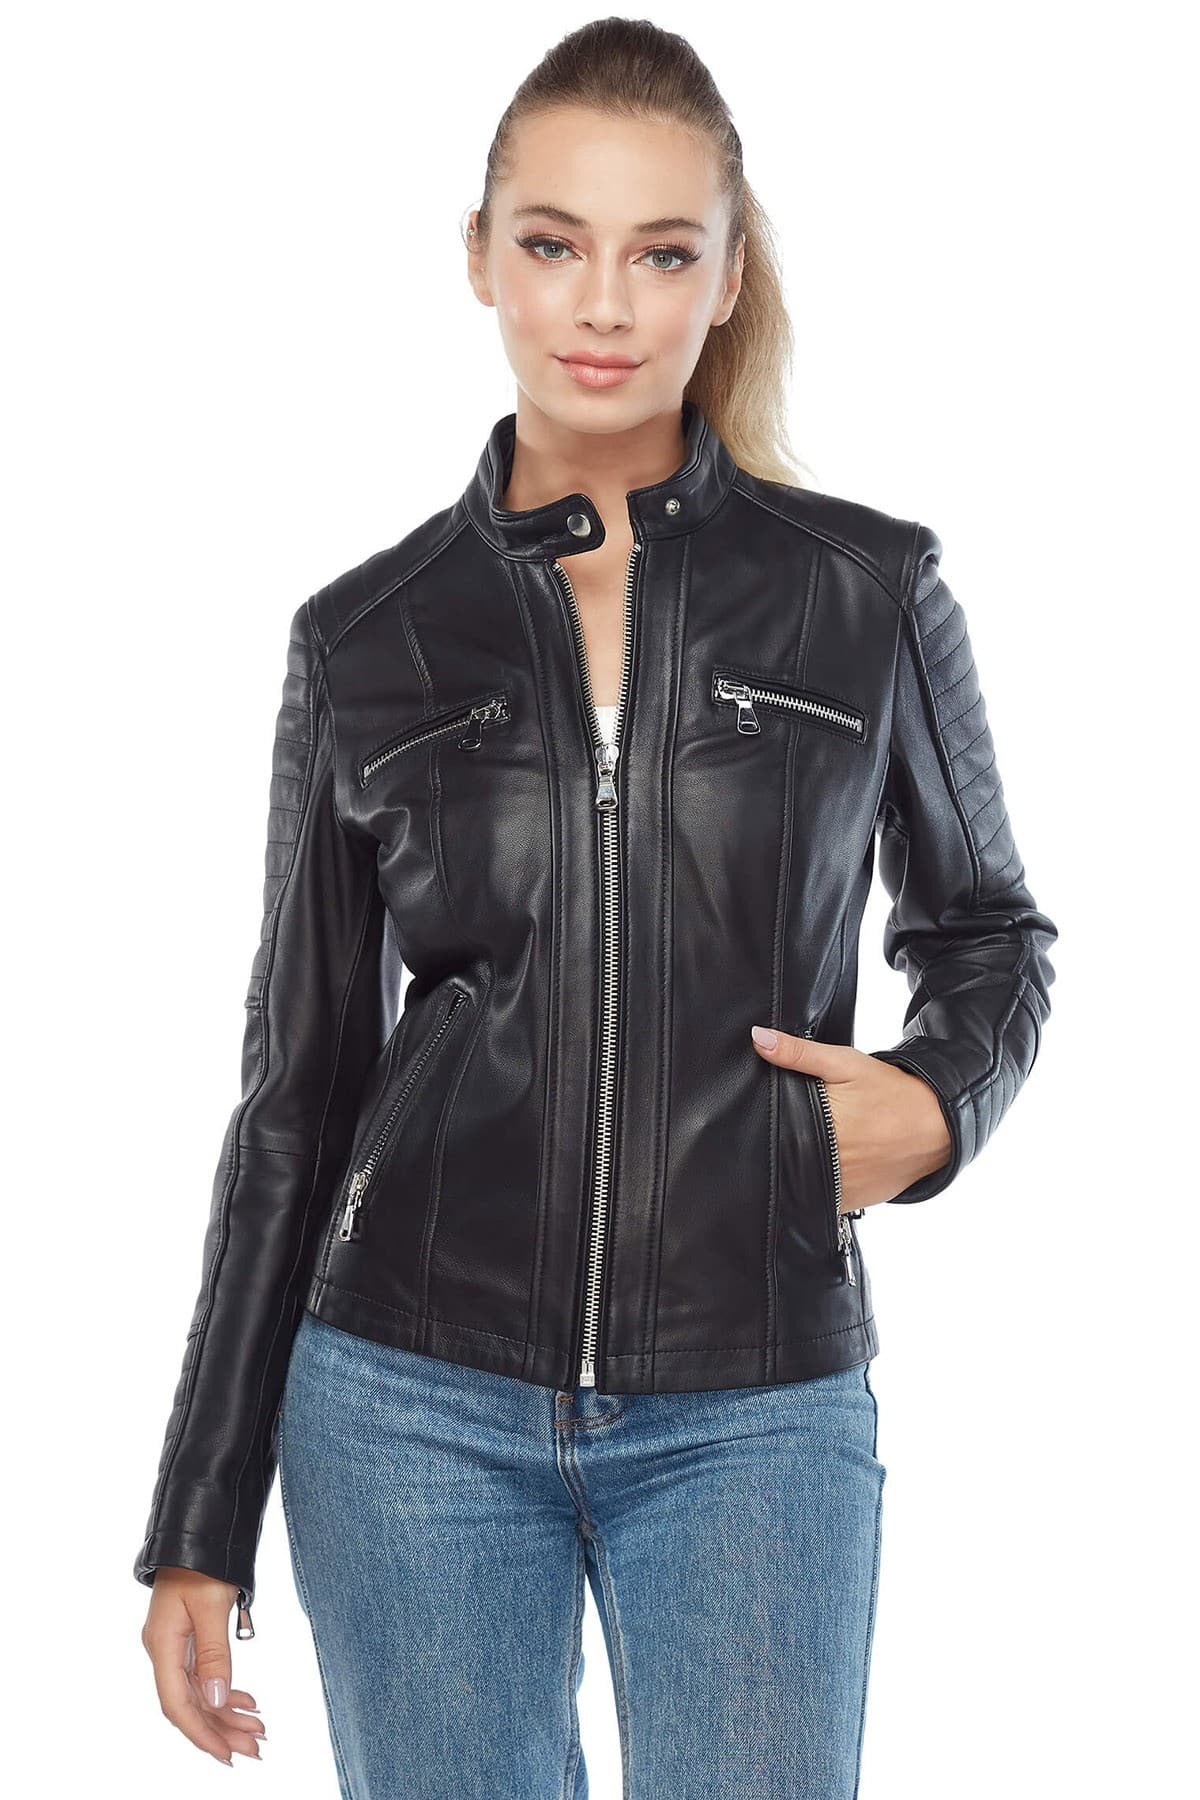 Sarah Archer Genuine Leather Jacket in Black3